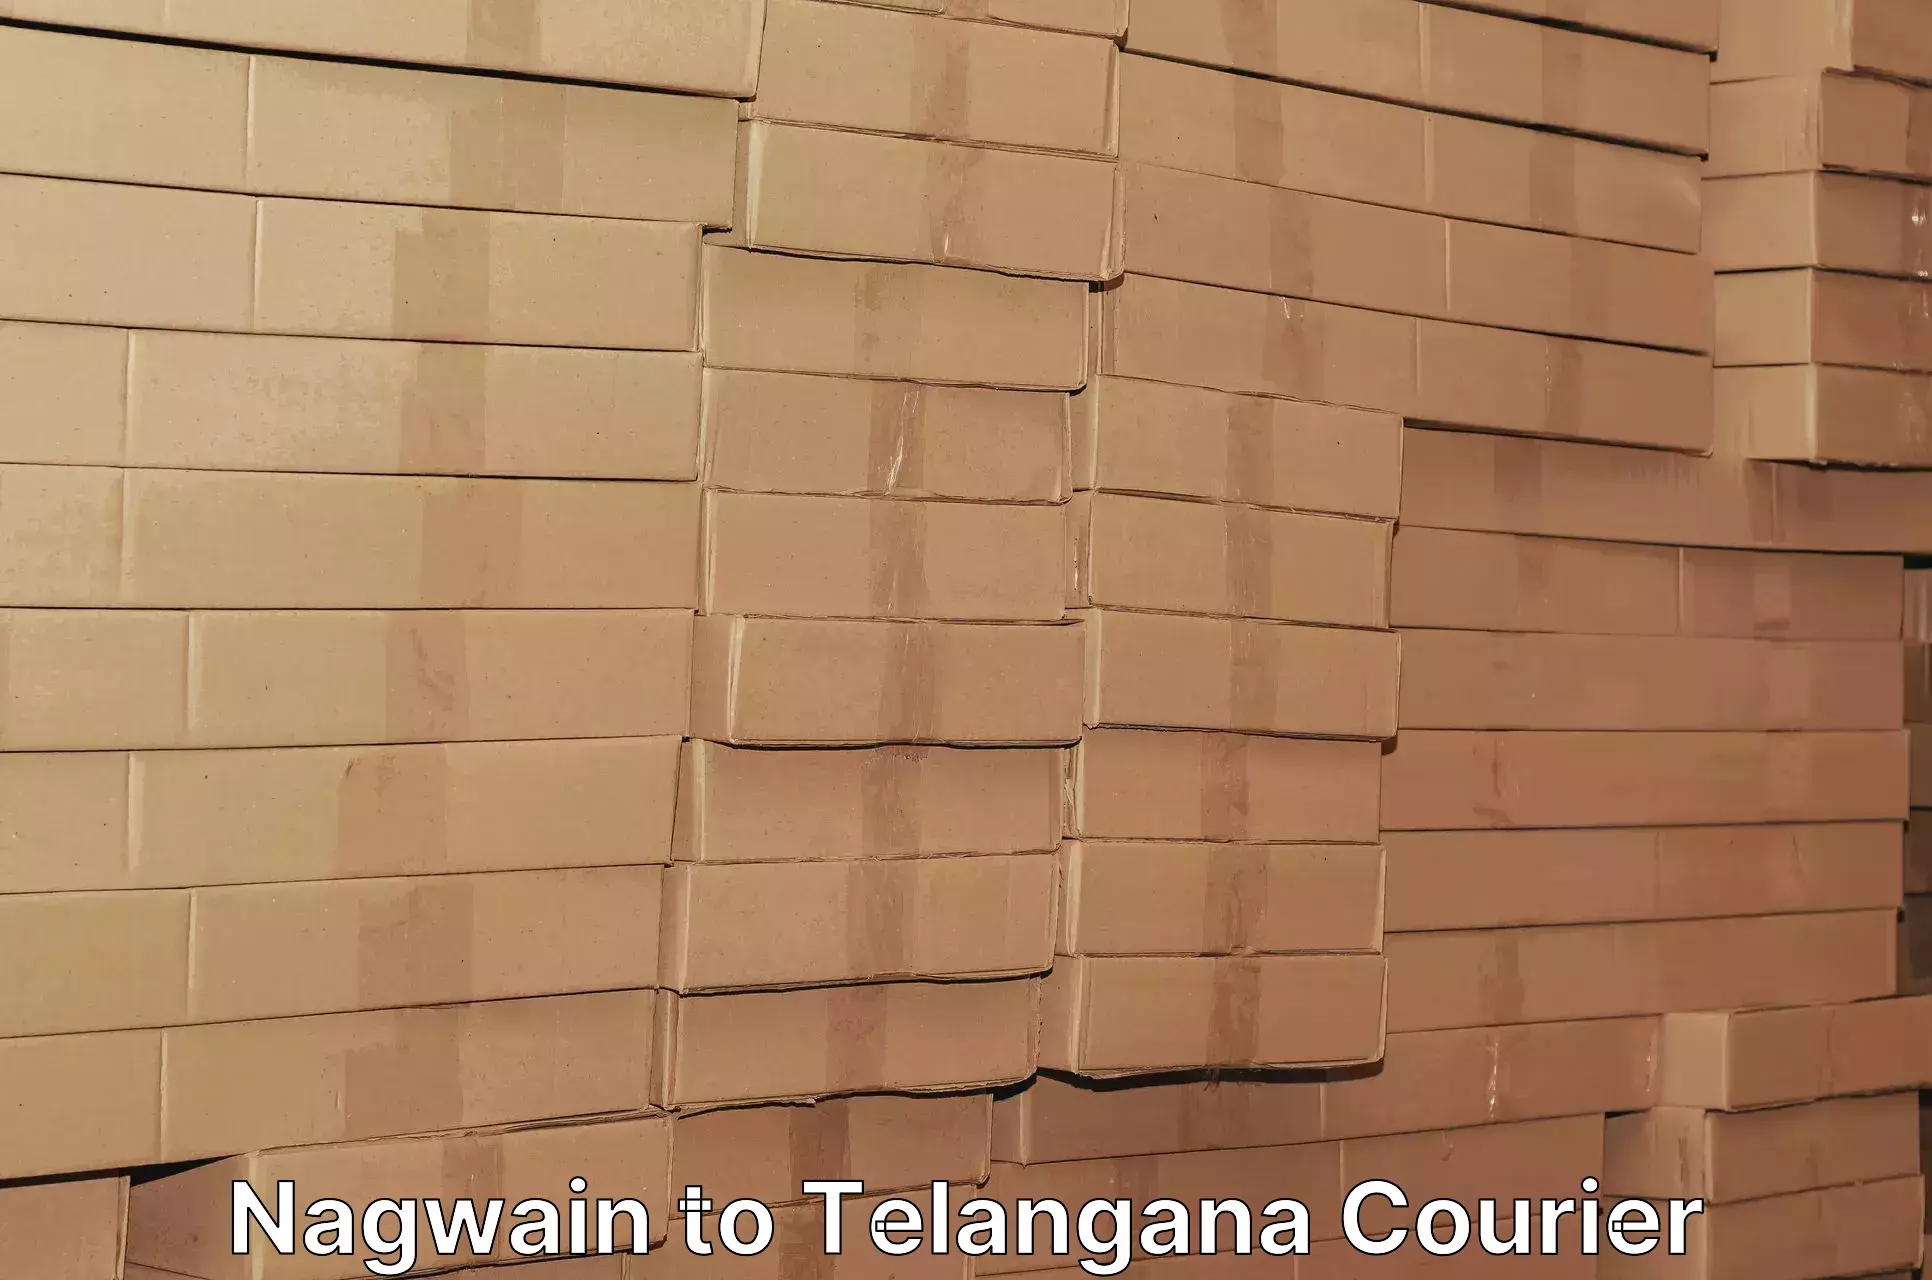 Courier insurance in Nagwain to Nakerakal